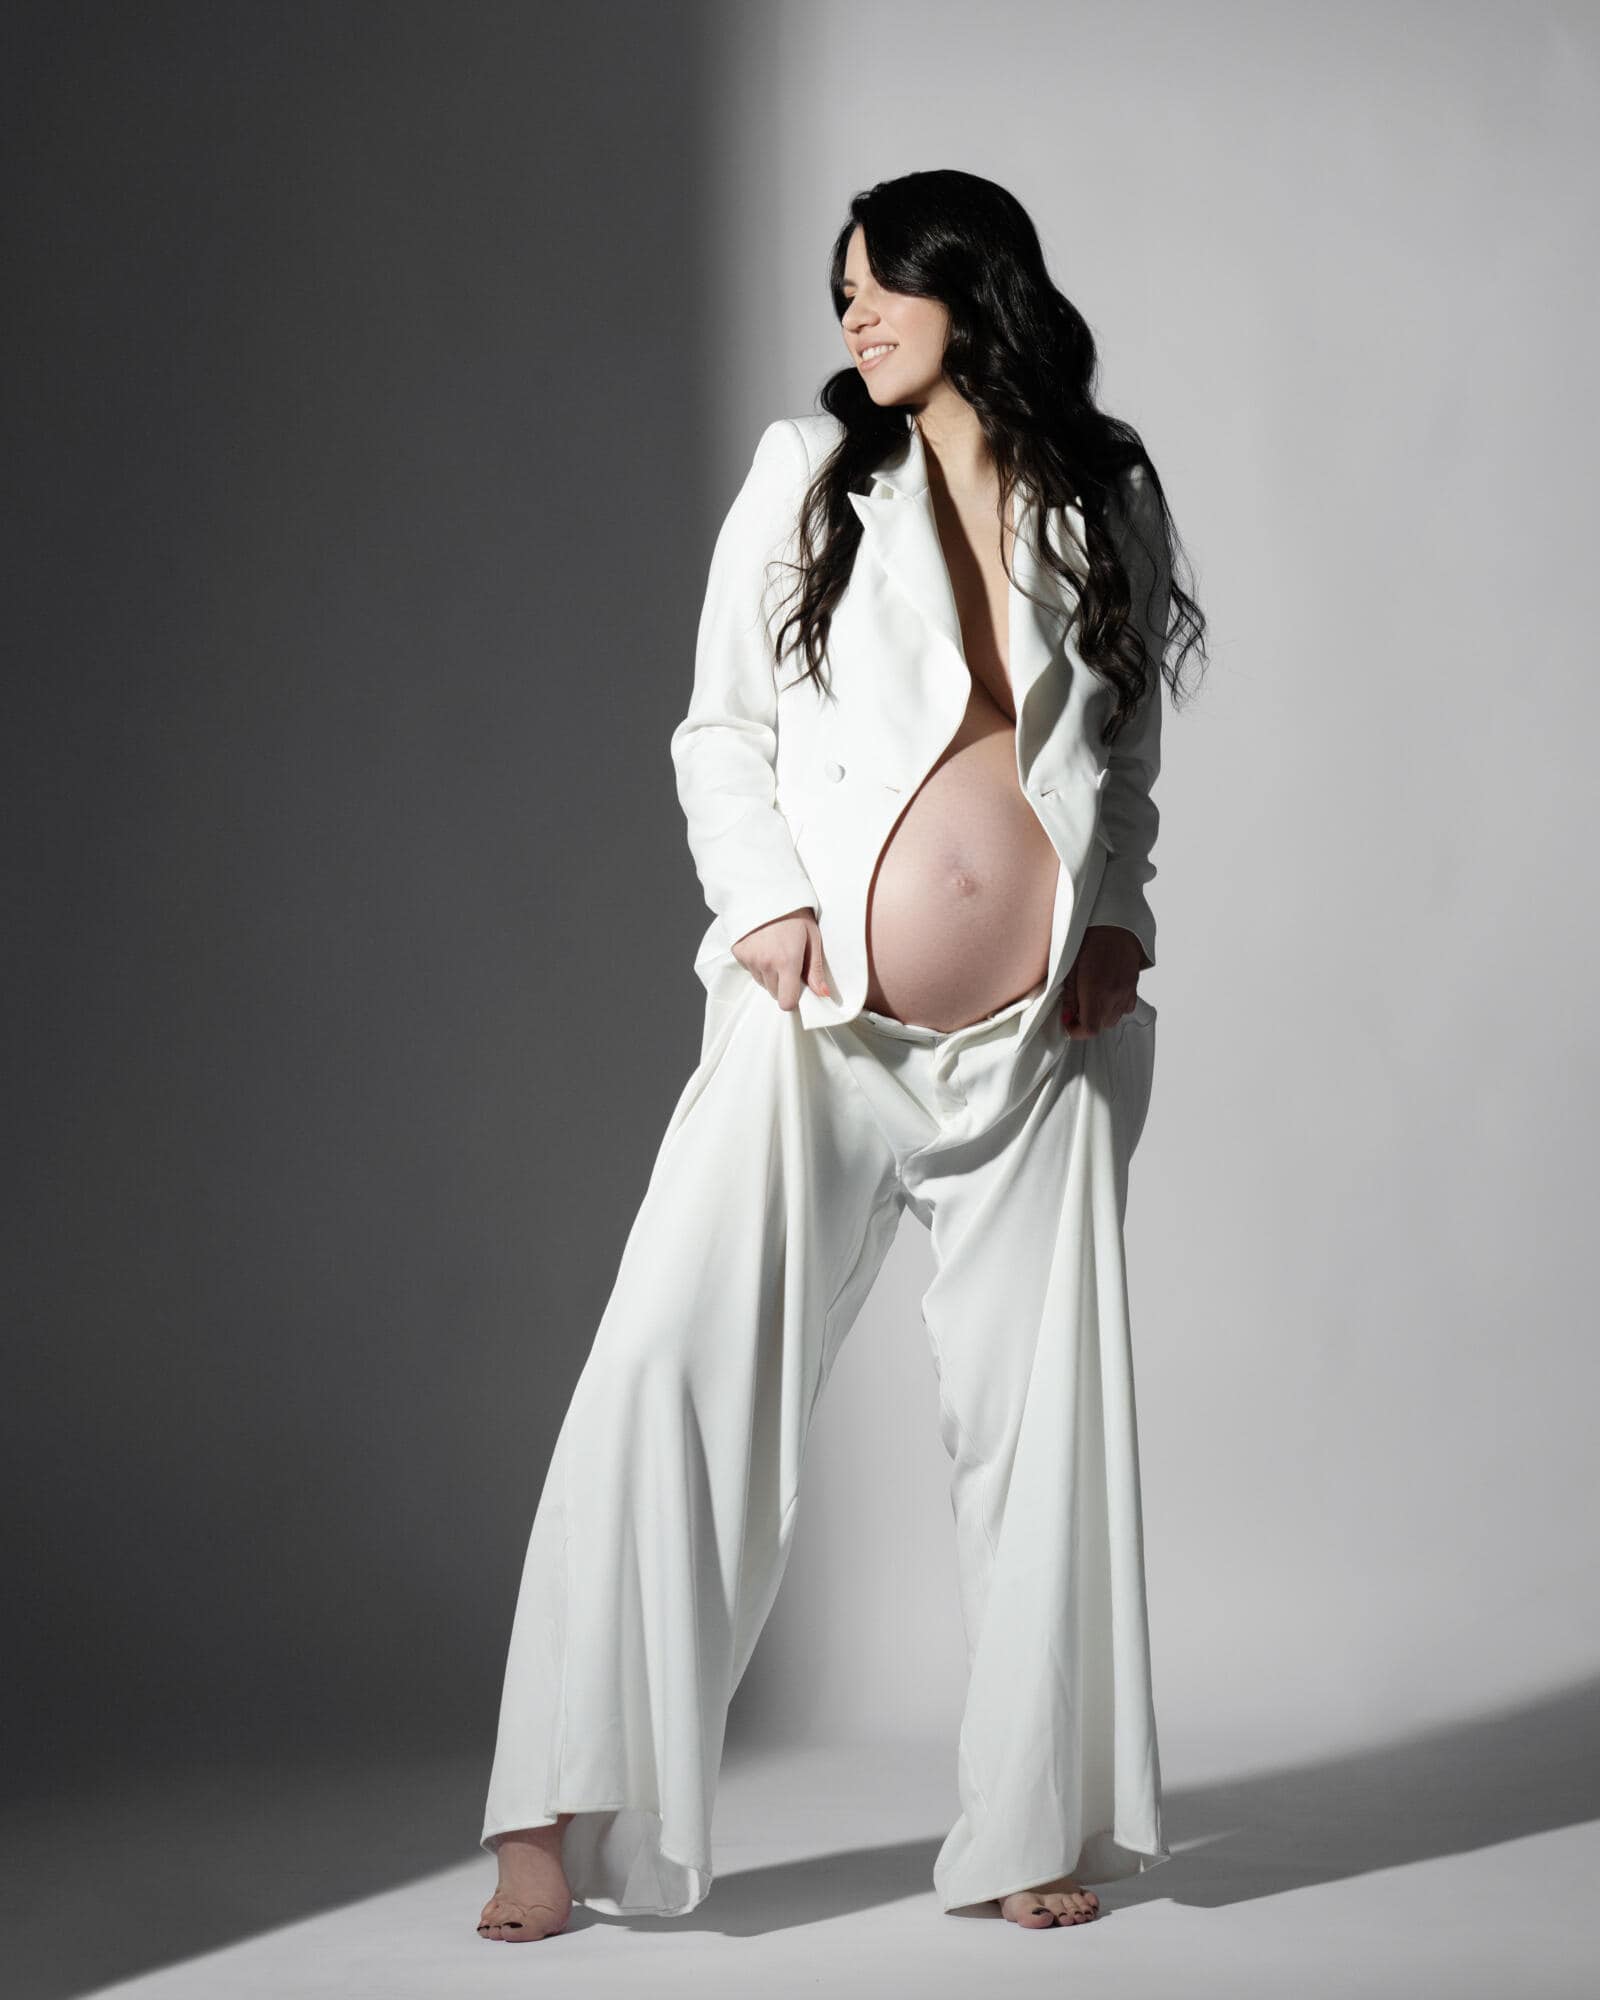 Maternity Workshop Birmingham Photographer Teacher, Pregnancy Photoshoots